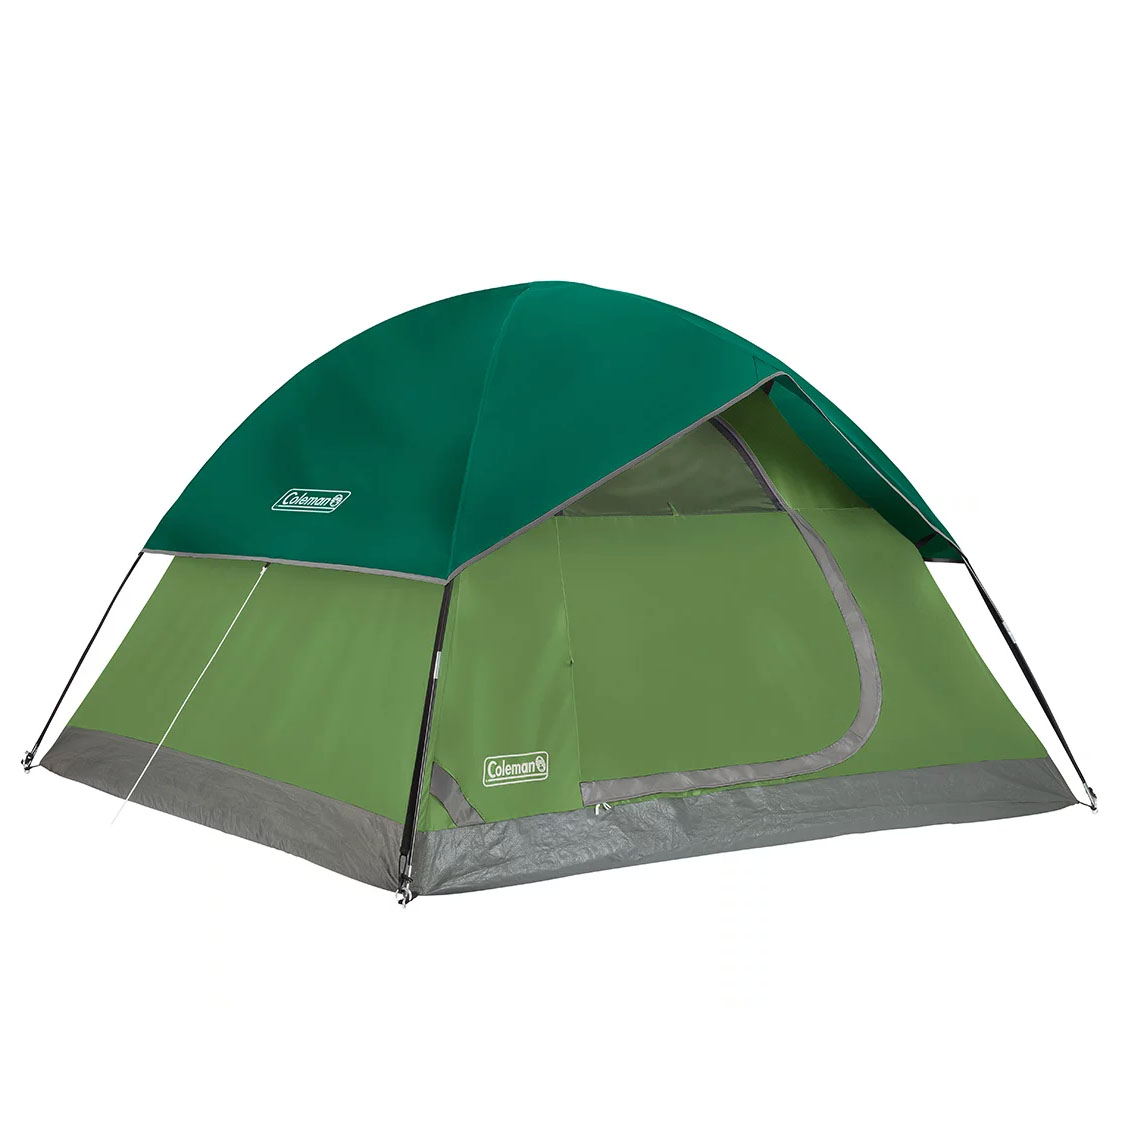 Green Coleman Sundome 4-Person Tent